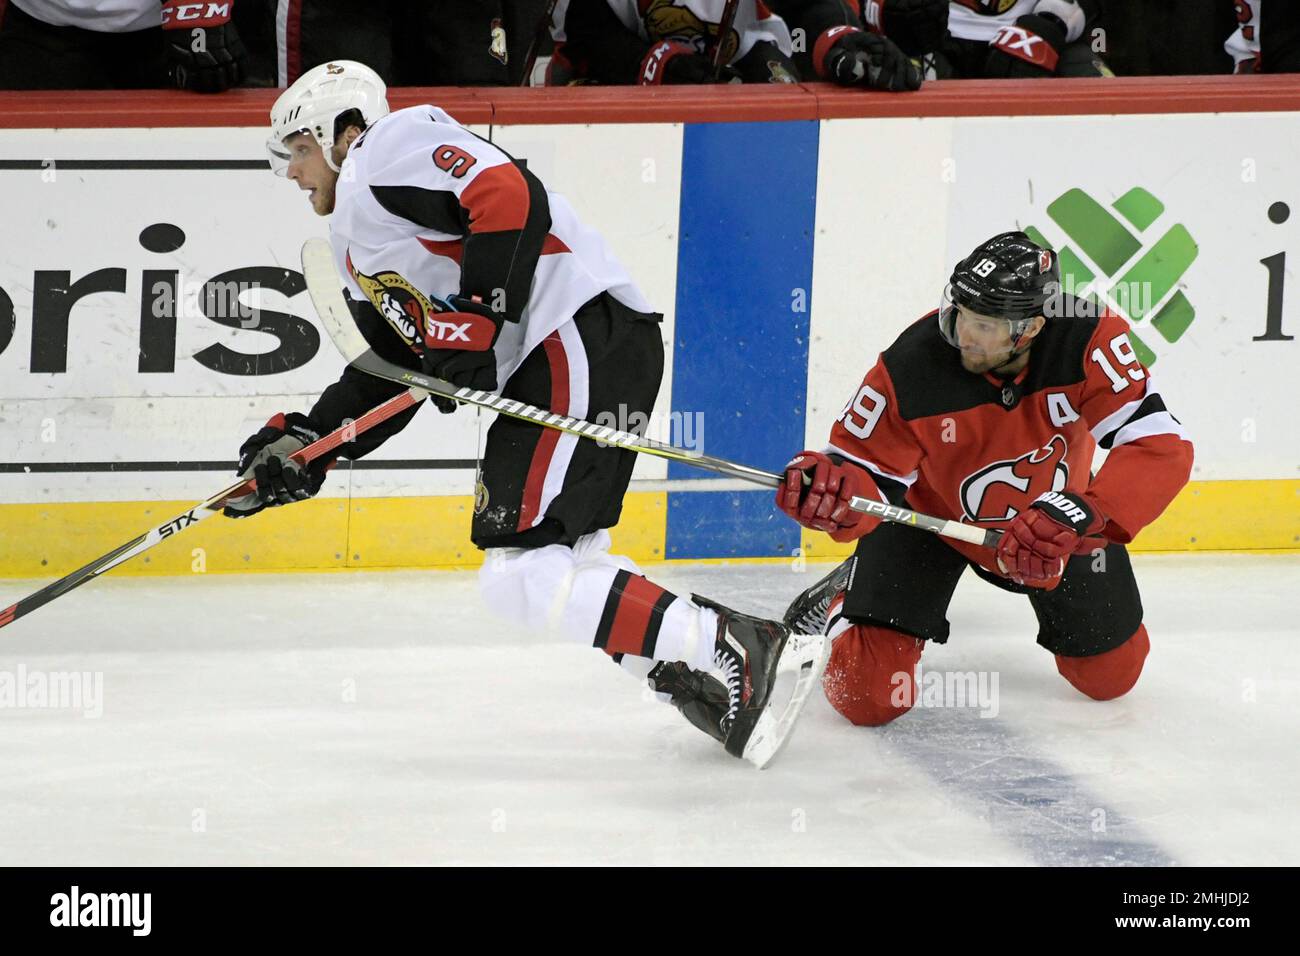 New Jersey Devils at Ottawa Senators Game Preview